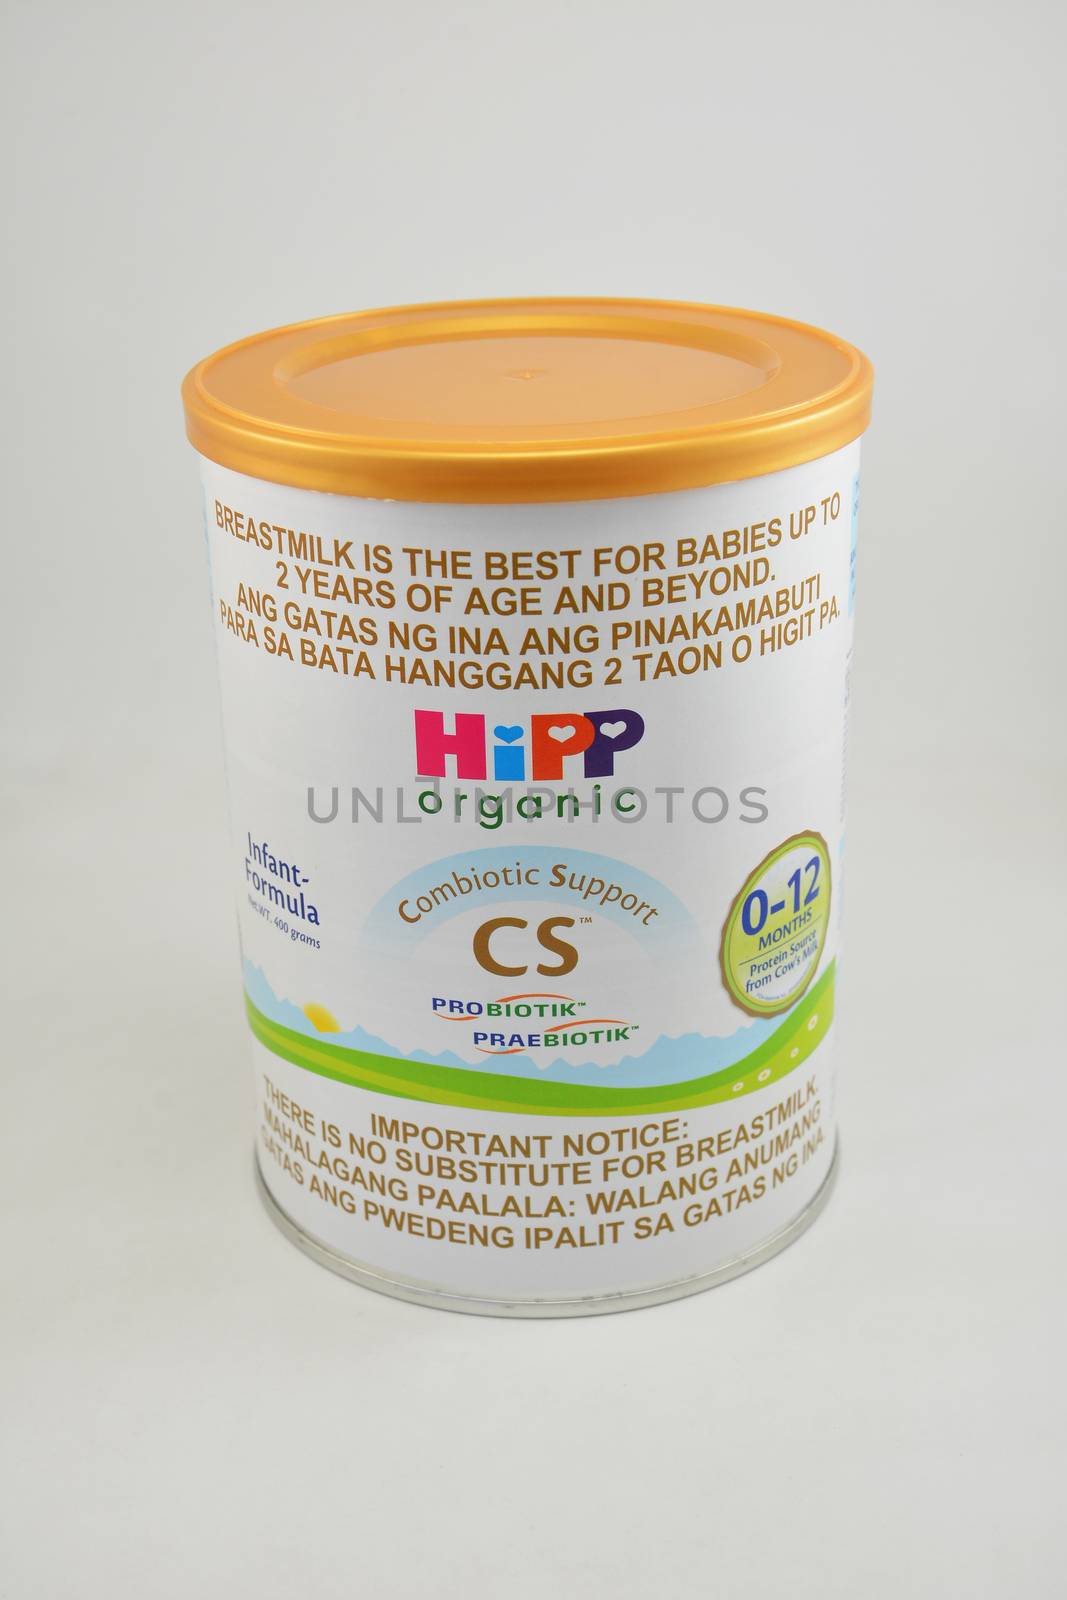 MANILA, PH - JUNE 26 - Hipp organic infant formula milk on June 26, 2020 in Manila, Philippines.